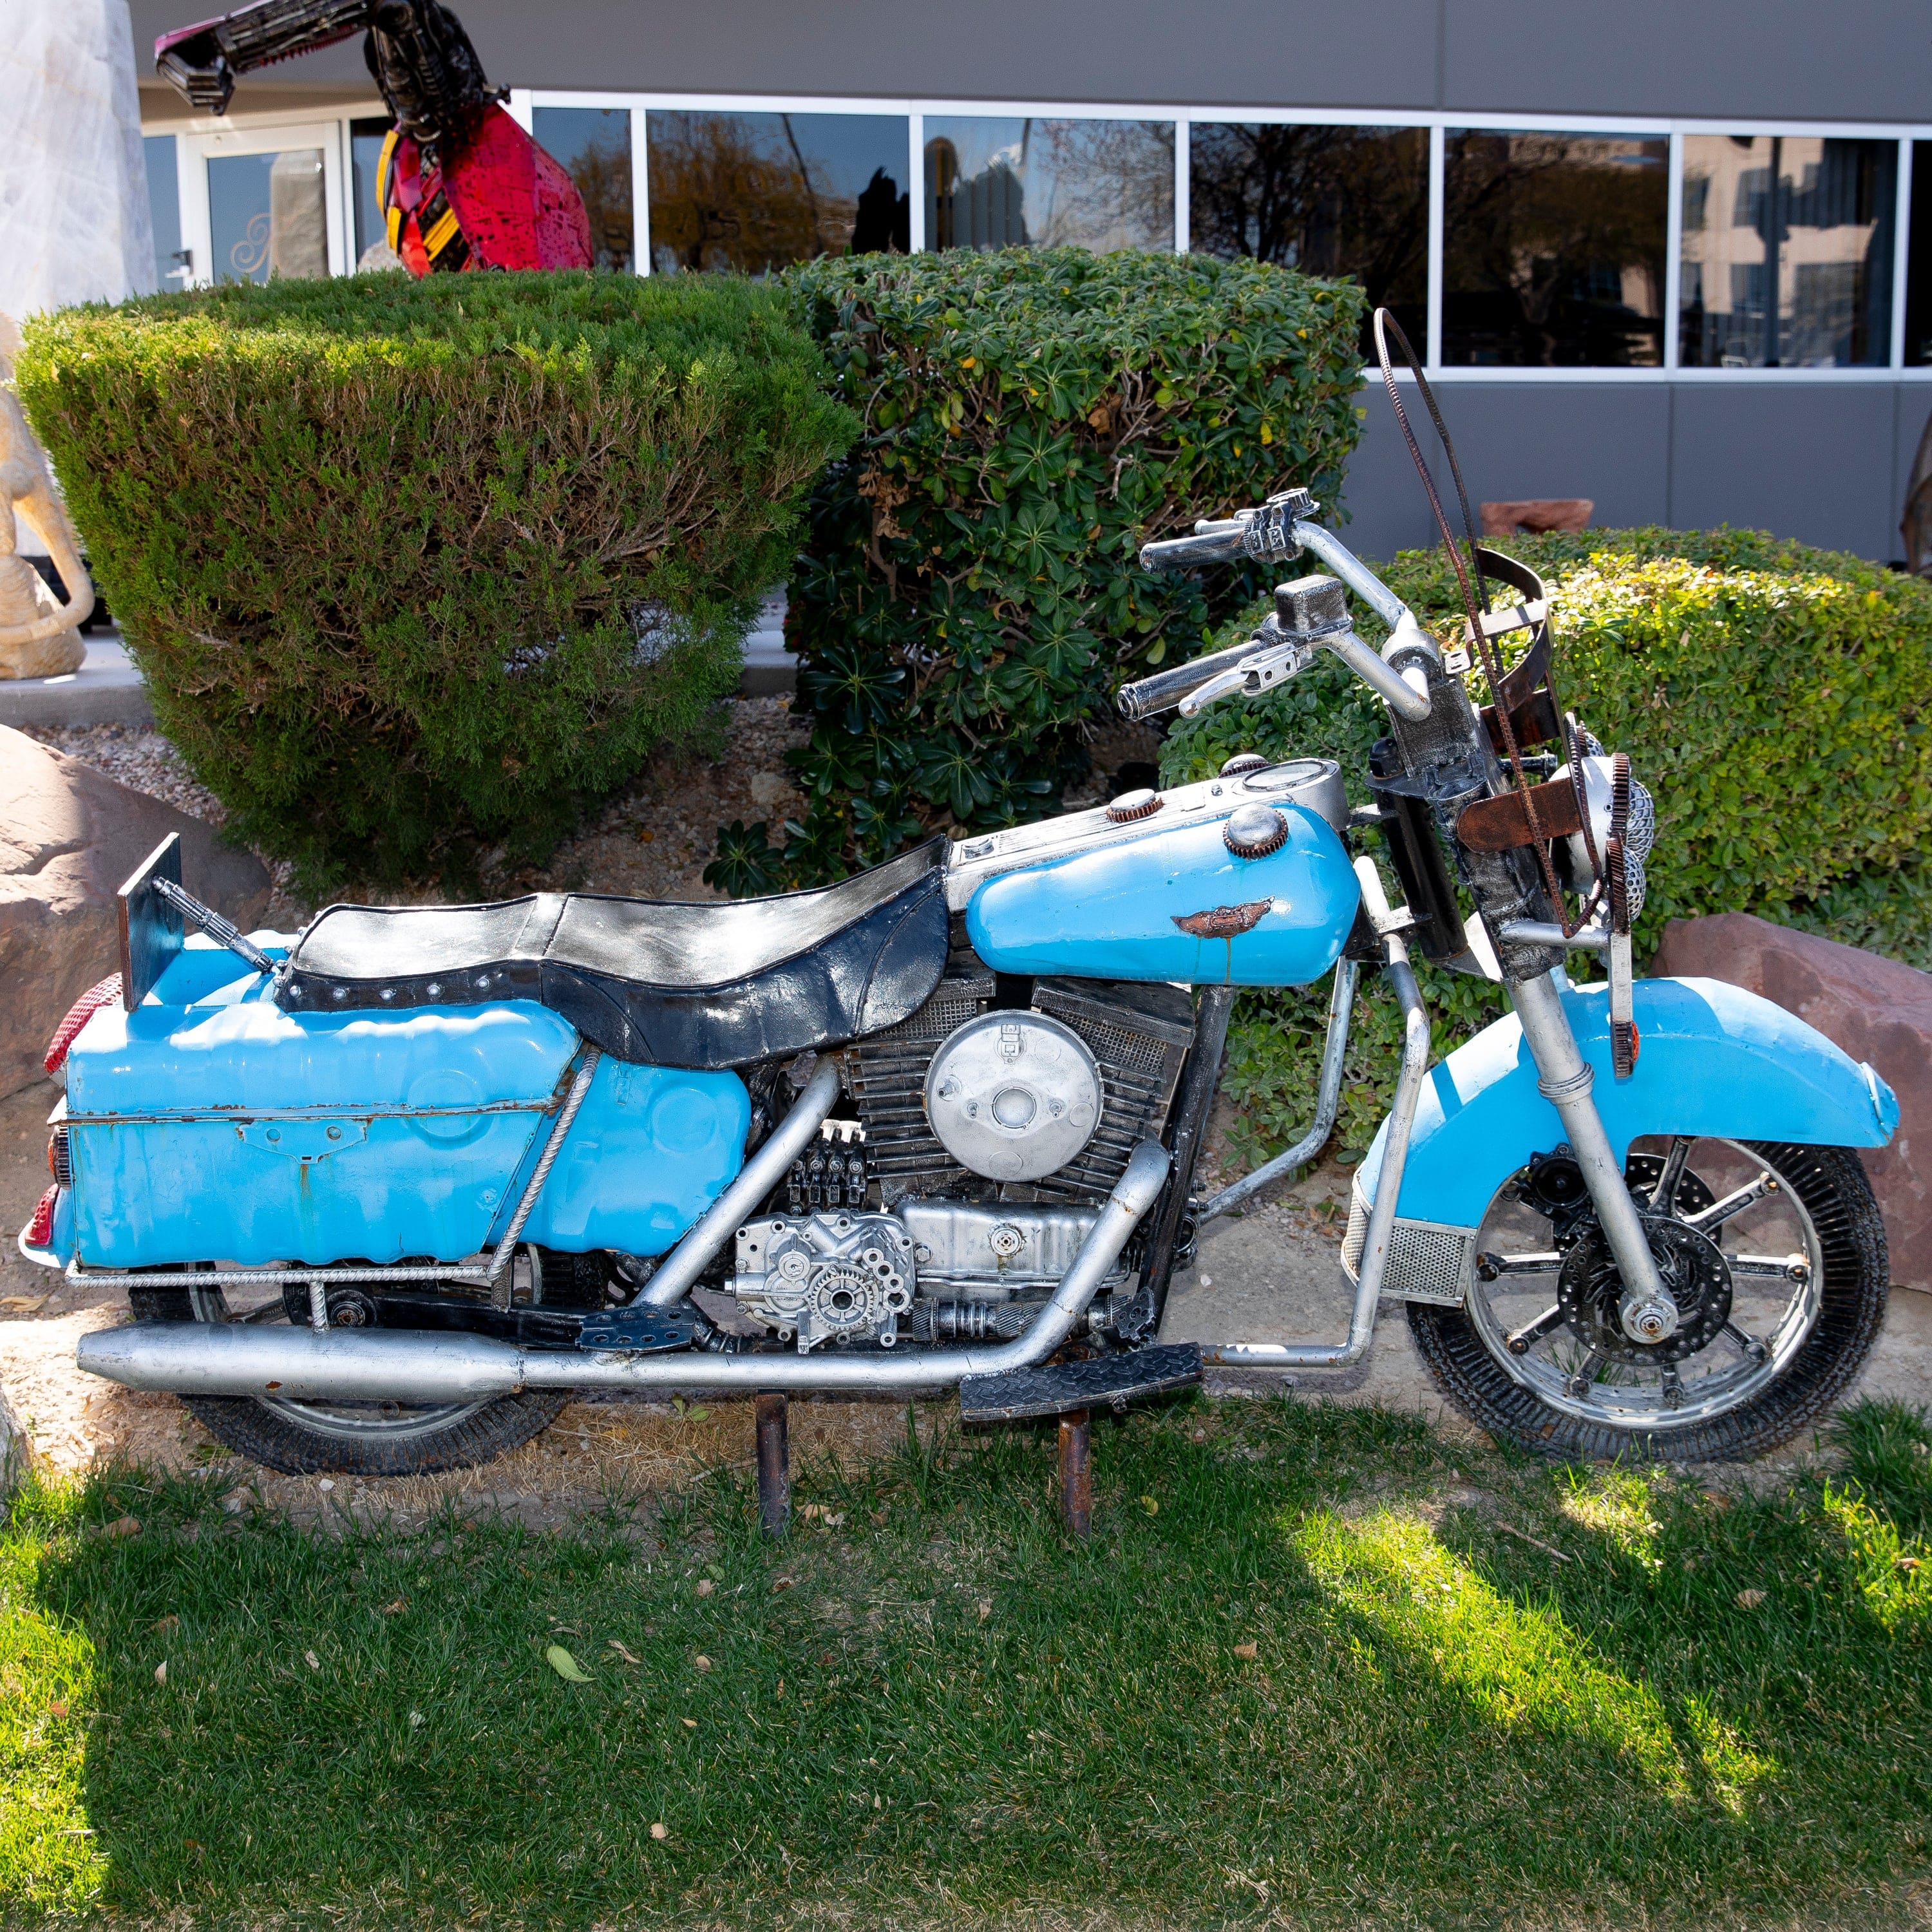 Kalifano Recycled Metal Art 92‚Äù Harley Davidson Chopper Inspired Recycled Metal Sculpture RMS-HD160x240-N01